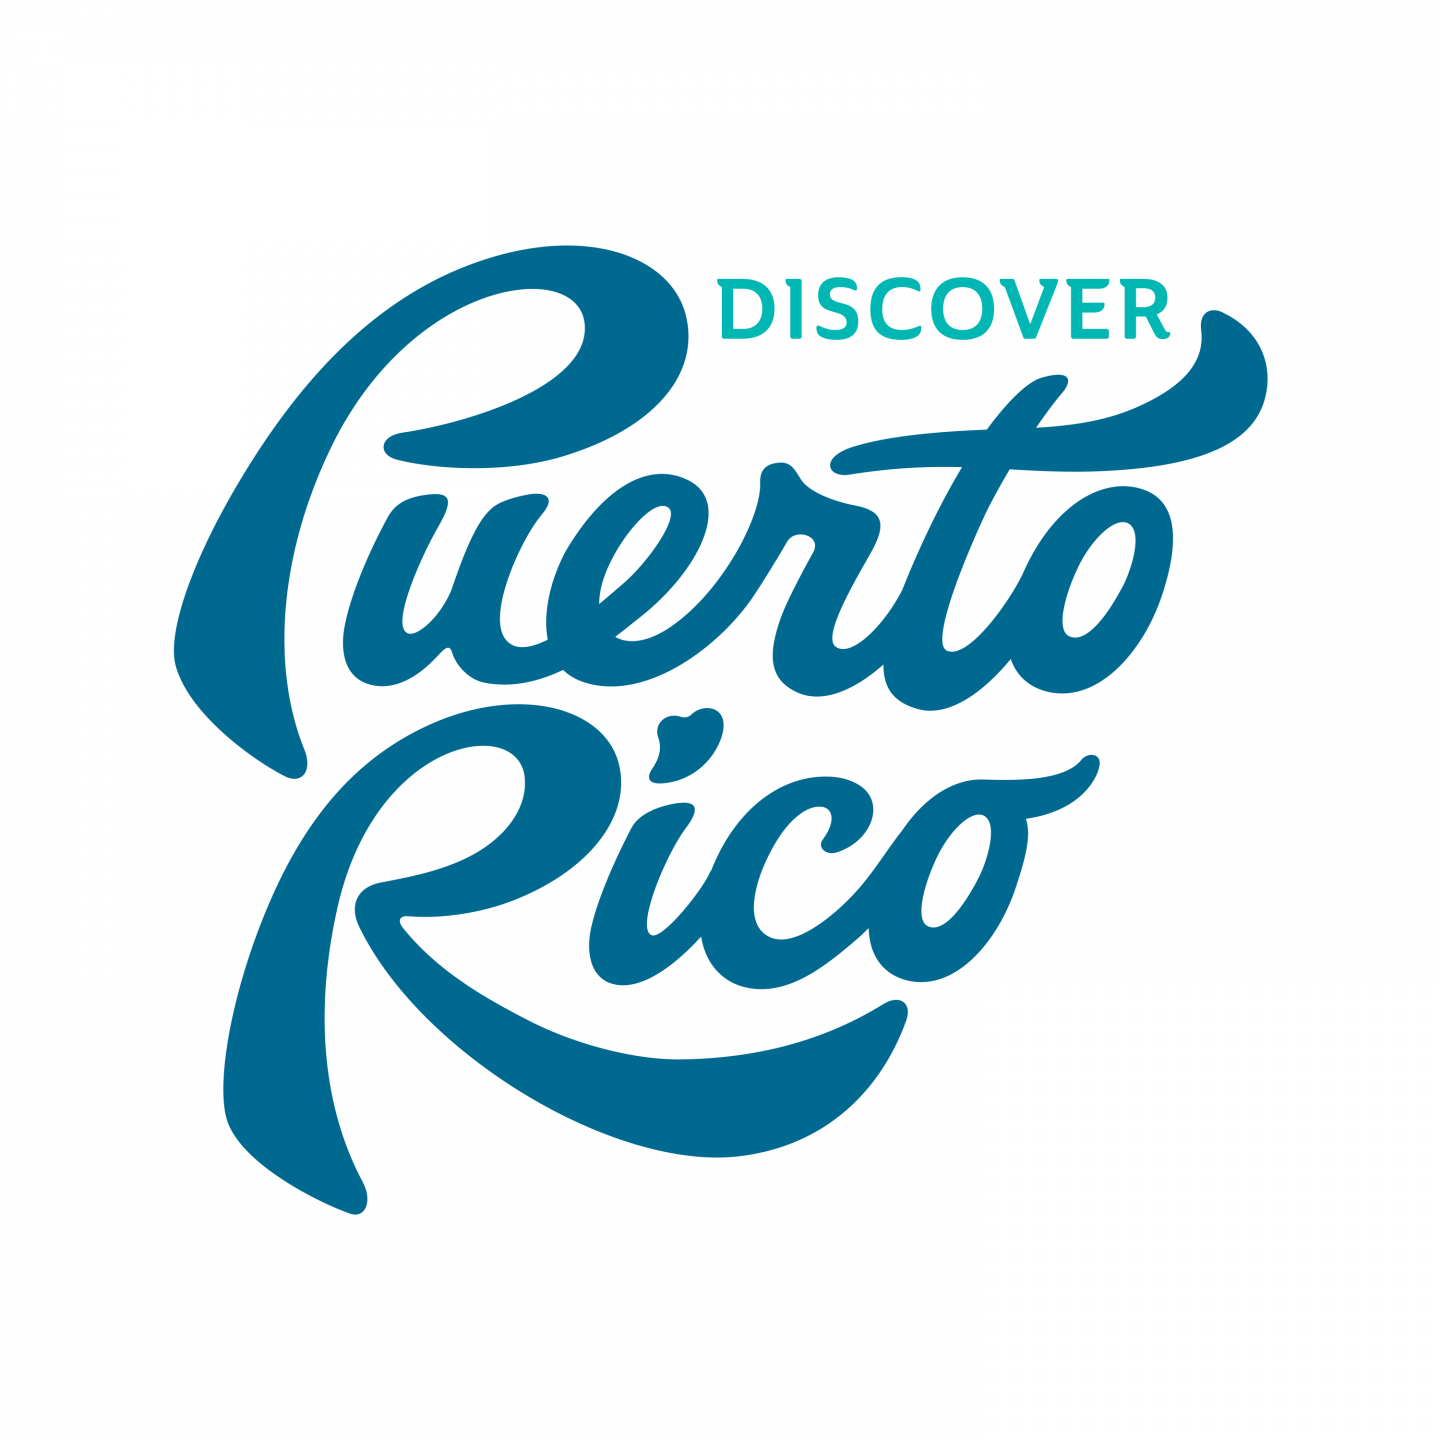 Discover Puerto Rico Log